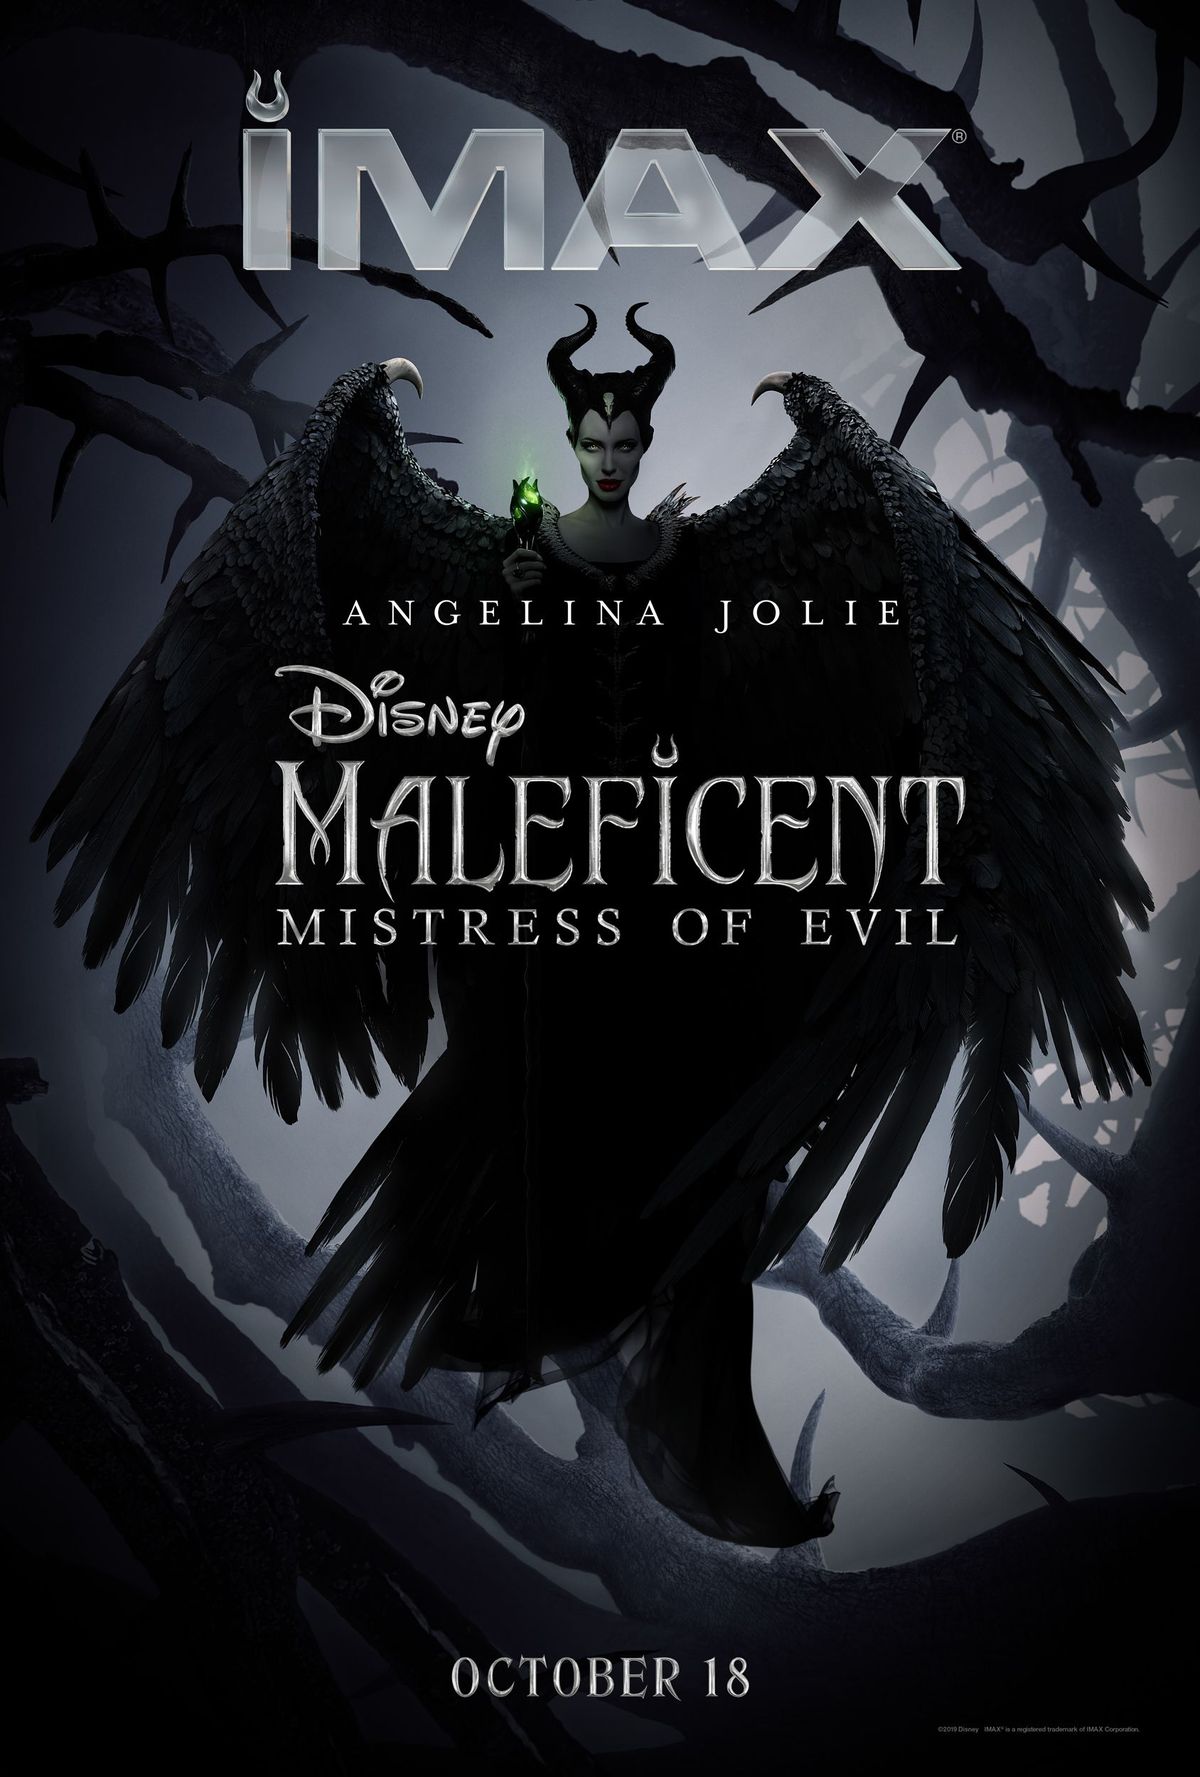 Maleficent: Η Mistress of Evil Poster ανακοινώνει την έναρξη των πωλήσεων εισιτηρίων